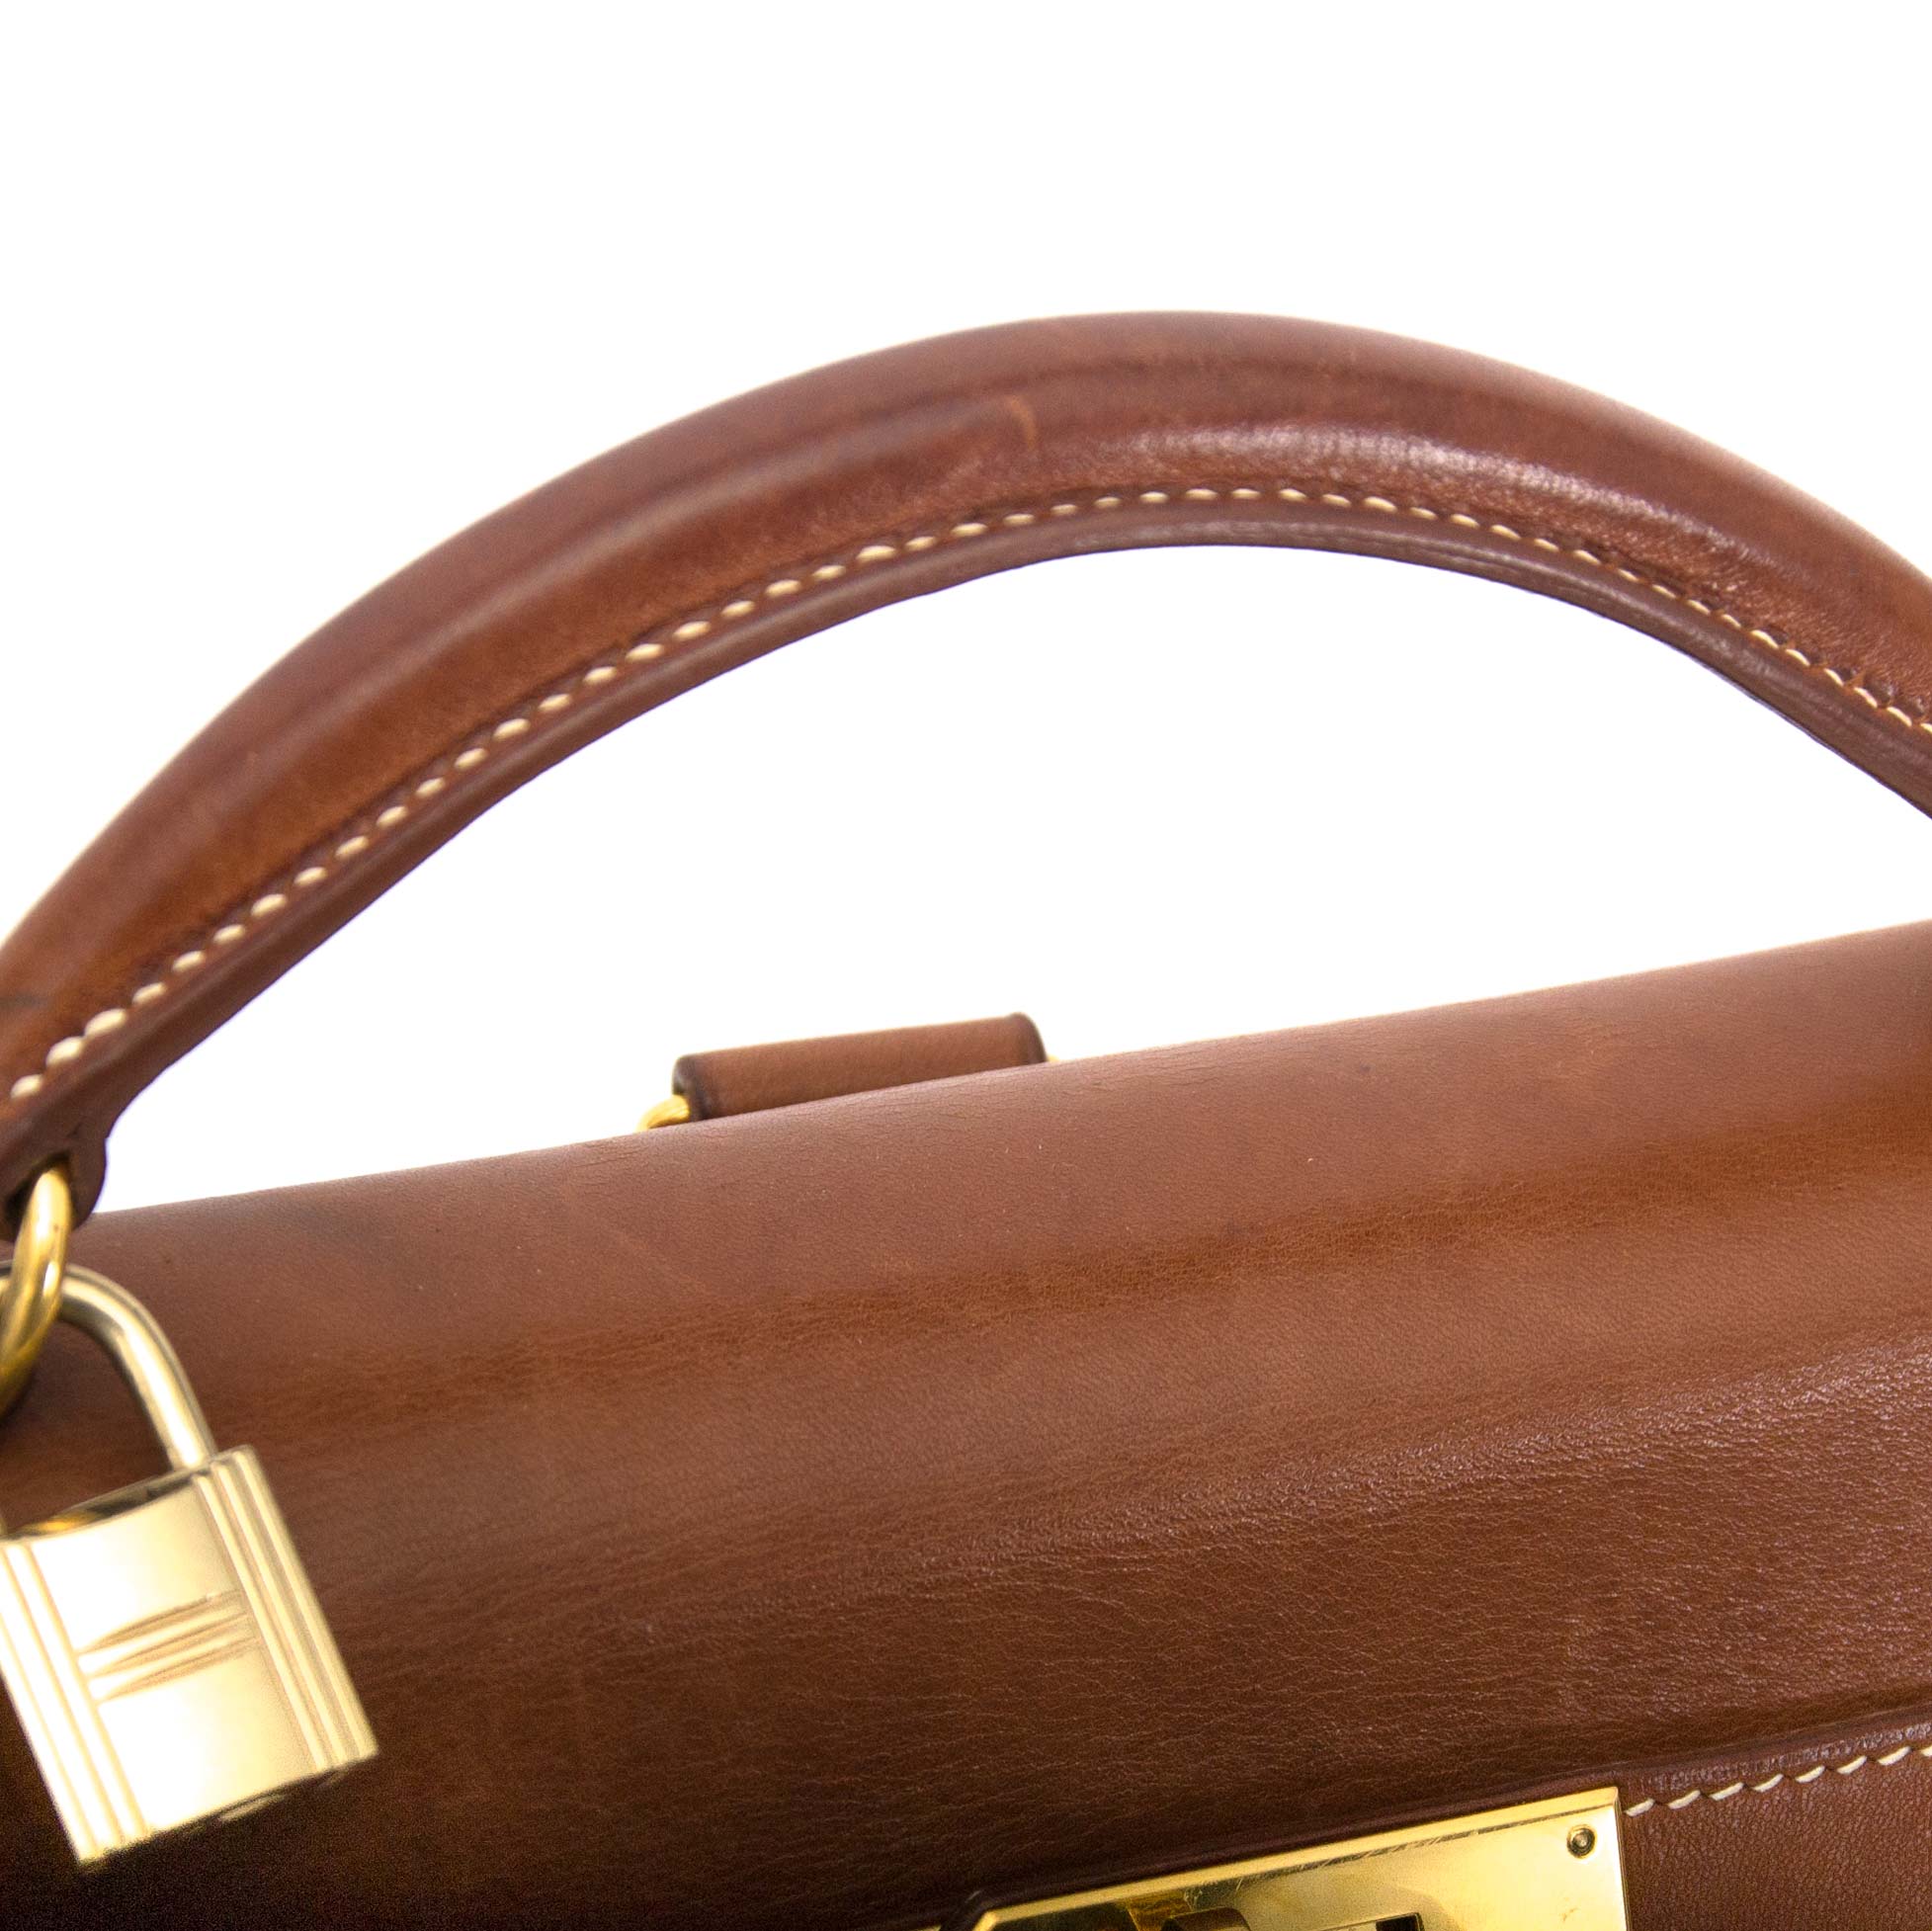 VINTAGE HERMÈS KELLY ADO BACKPACK in saddle brown leather – THE